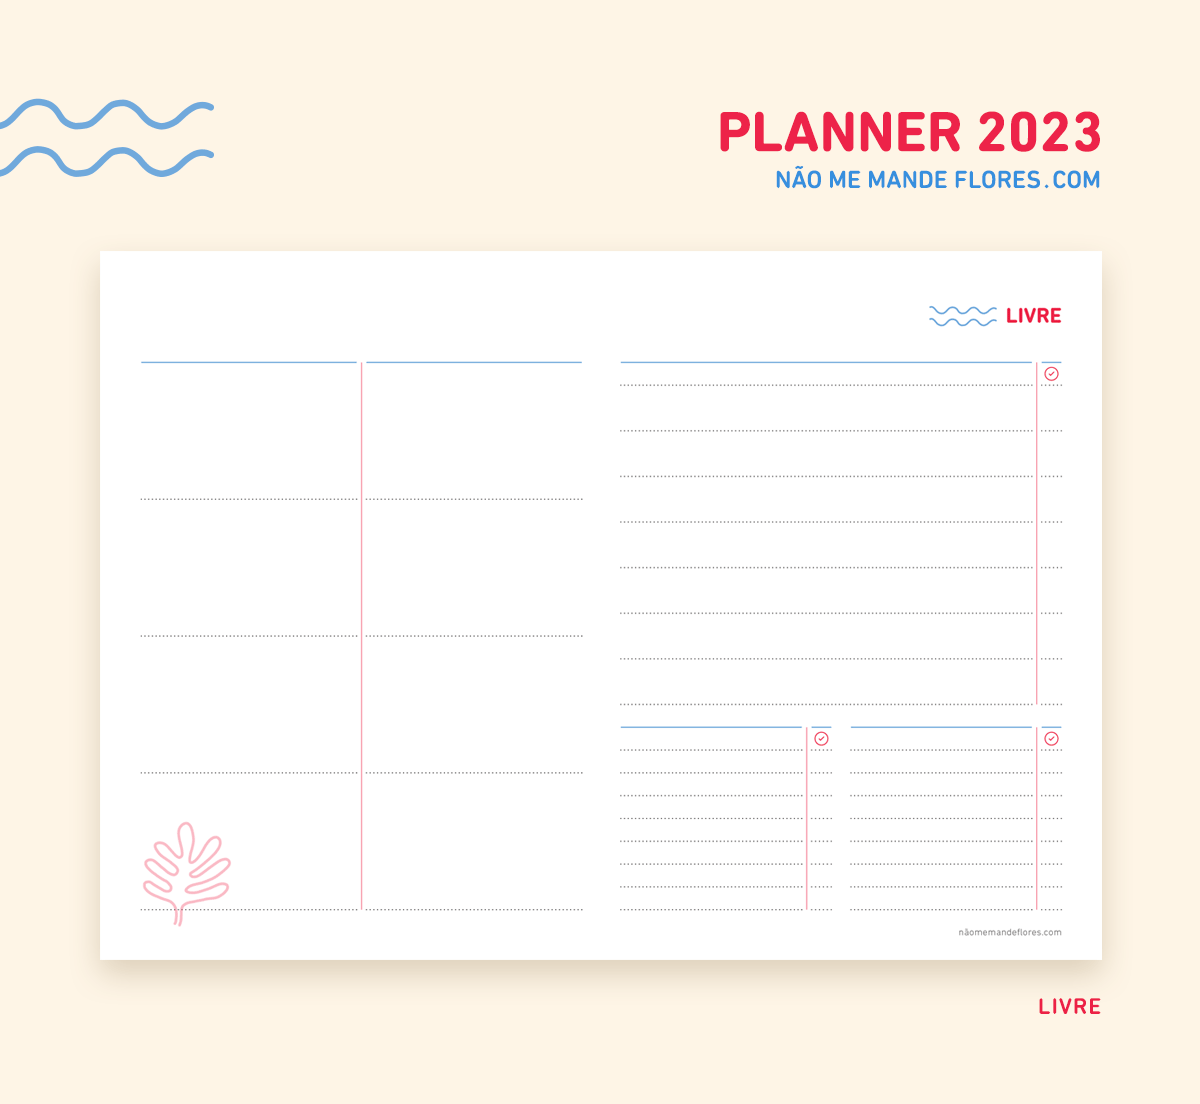 Planner Não Me Mande Flores 2023 - Planner Livre